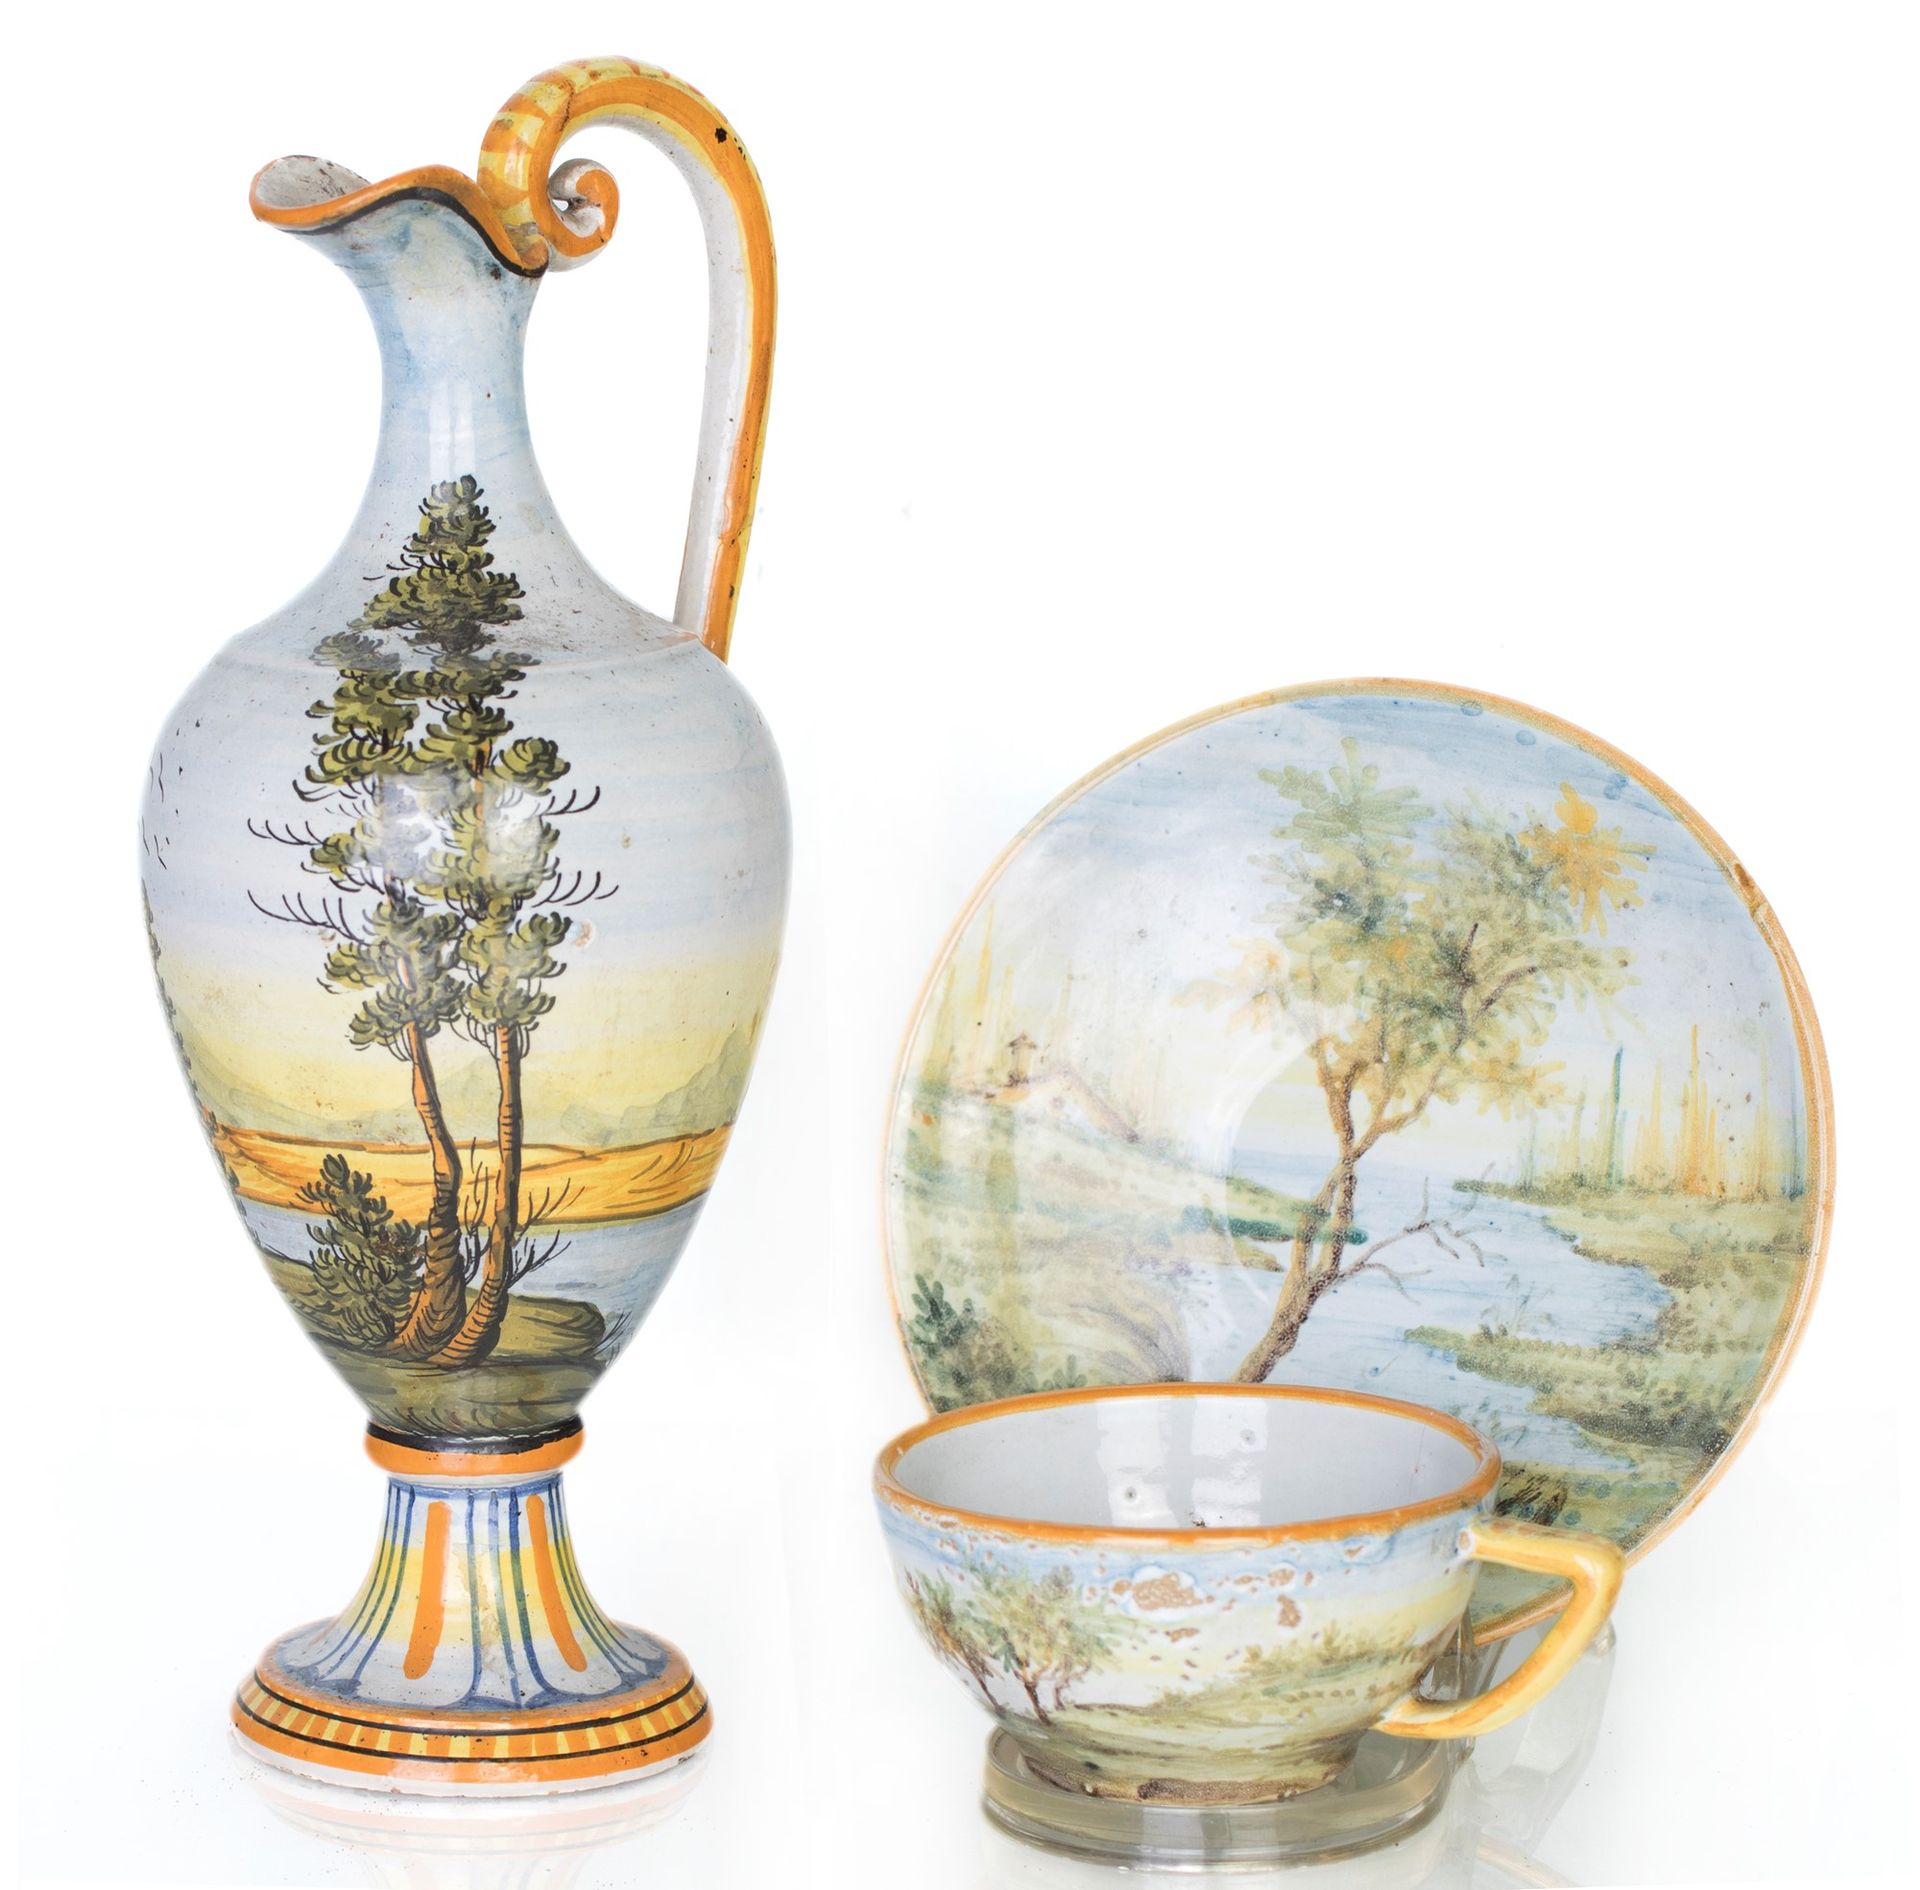 Castelli ceramic jug and cup with saucer 饰以制造过程中特有色调的风景画